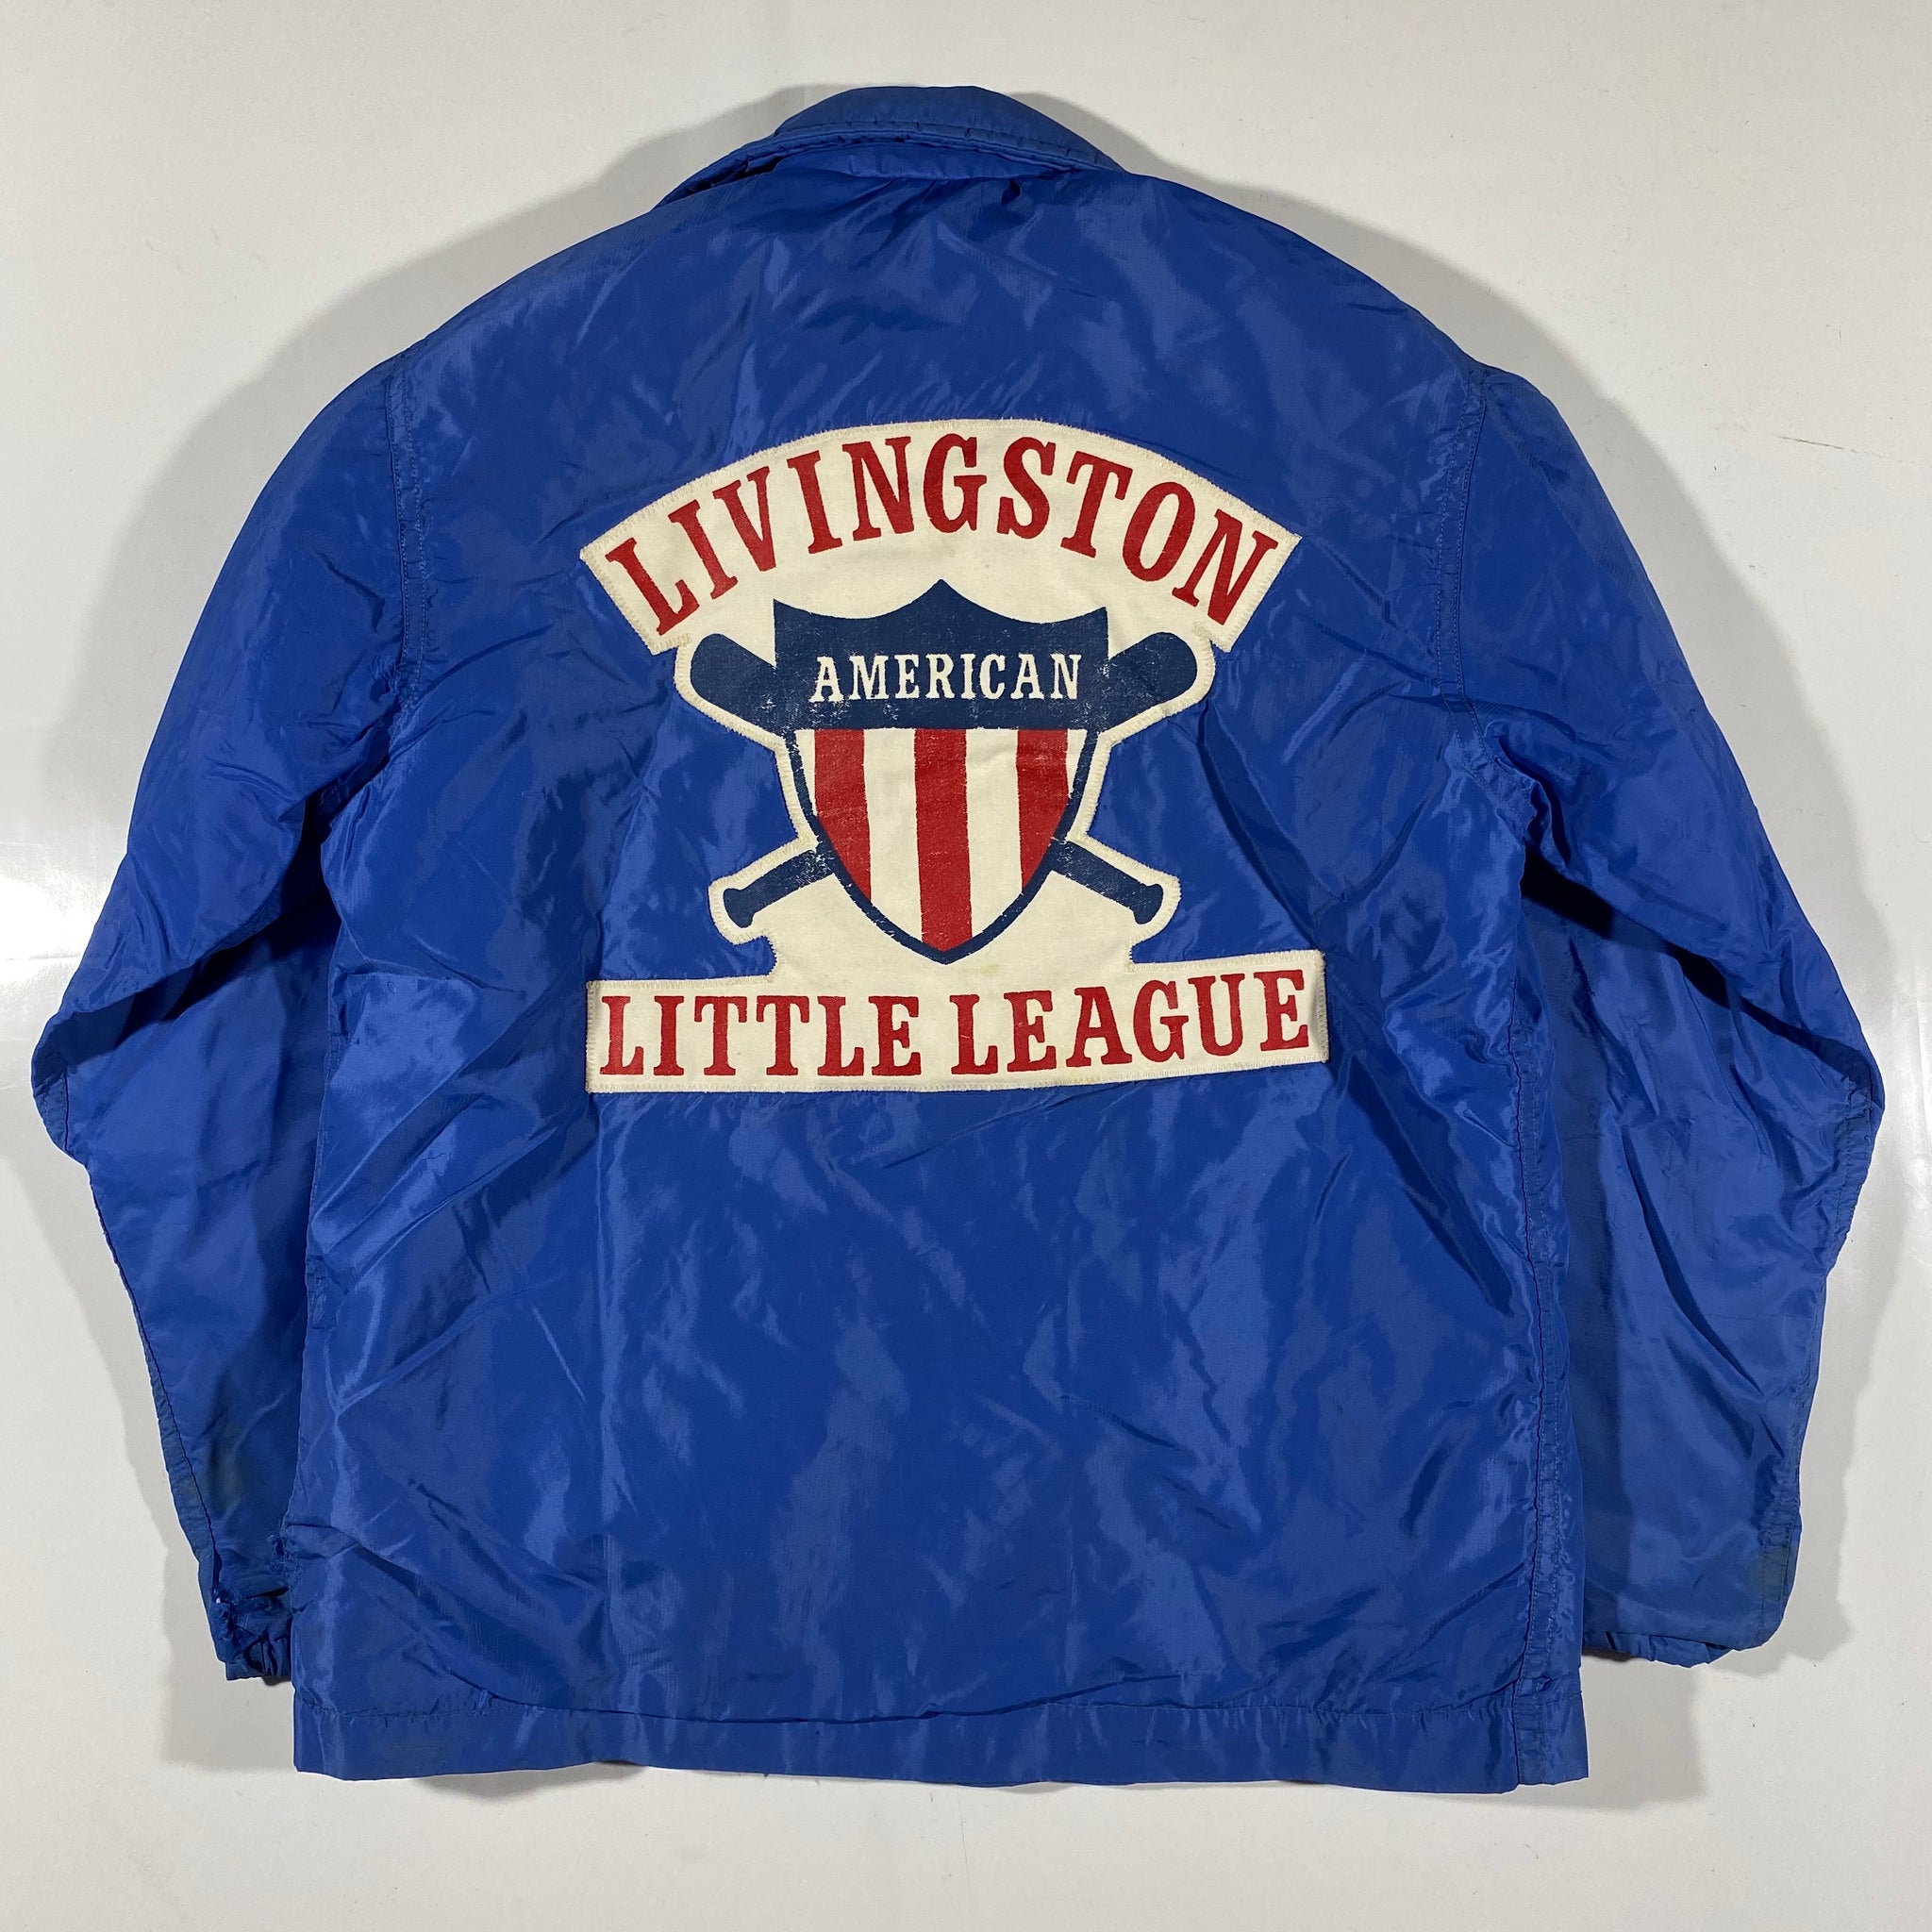 Livingston baseball jackets. S/M fit.